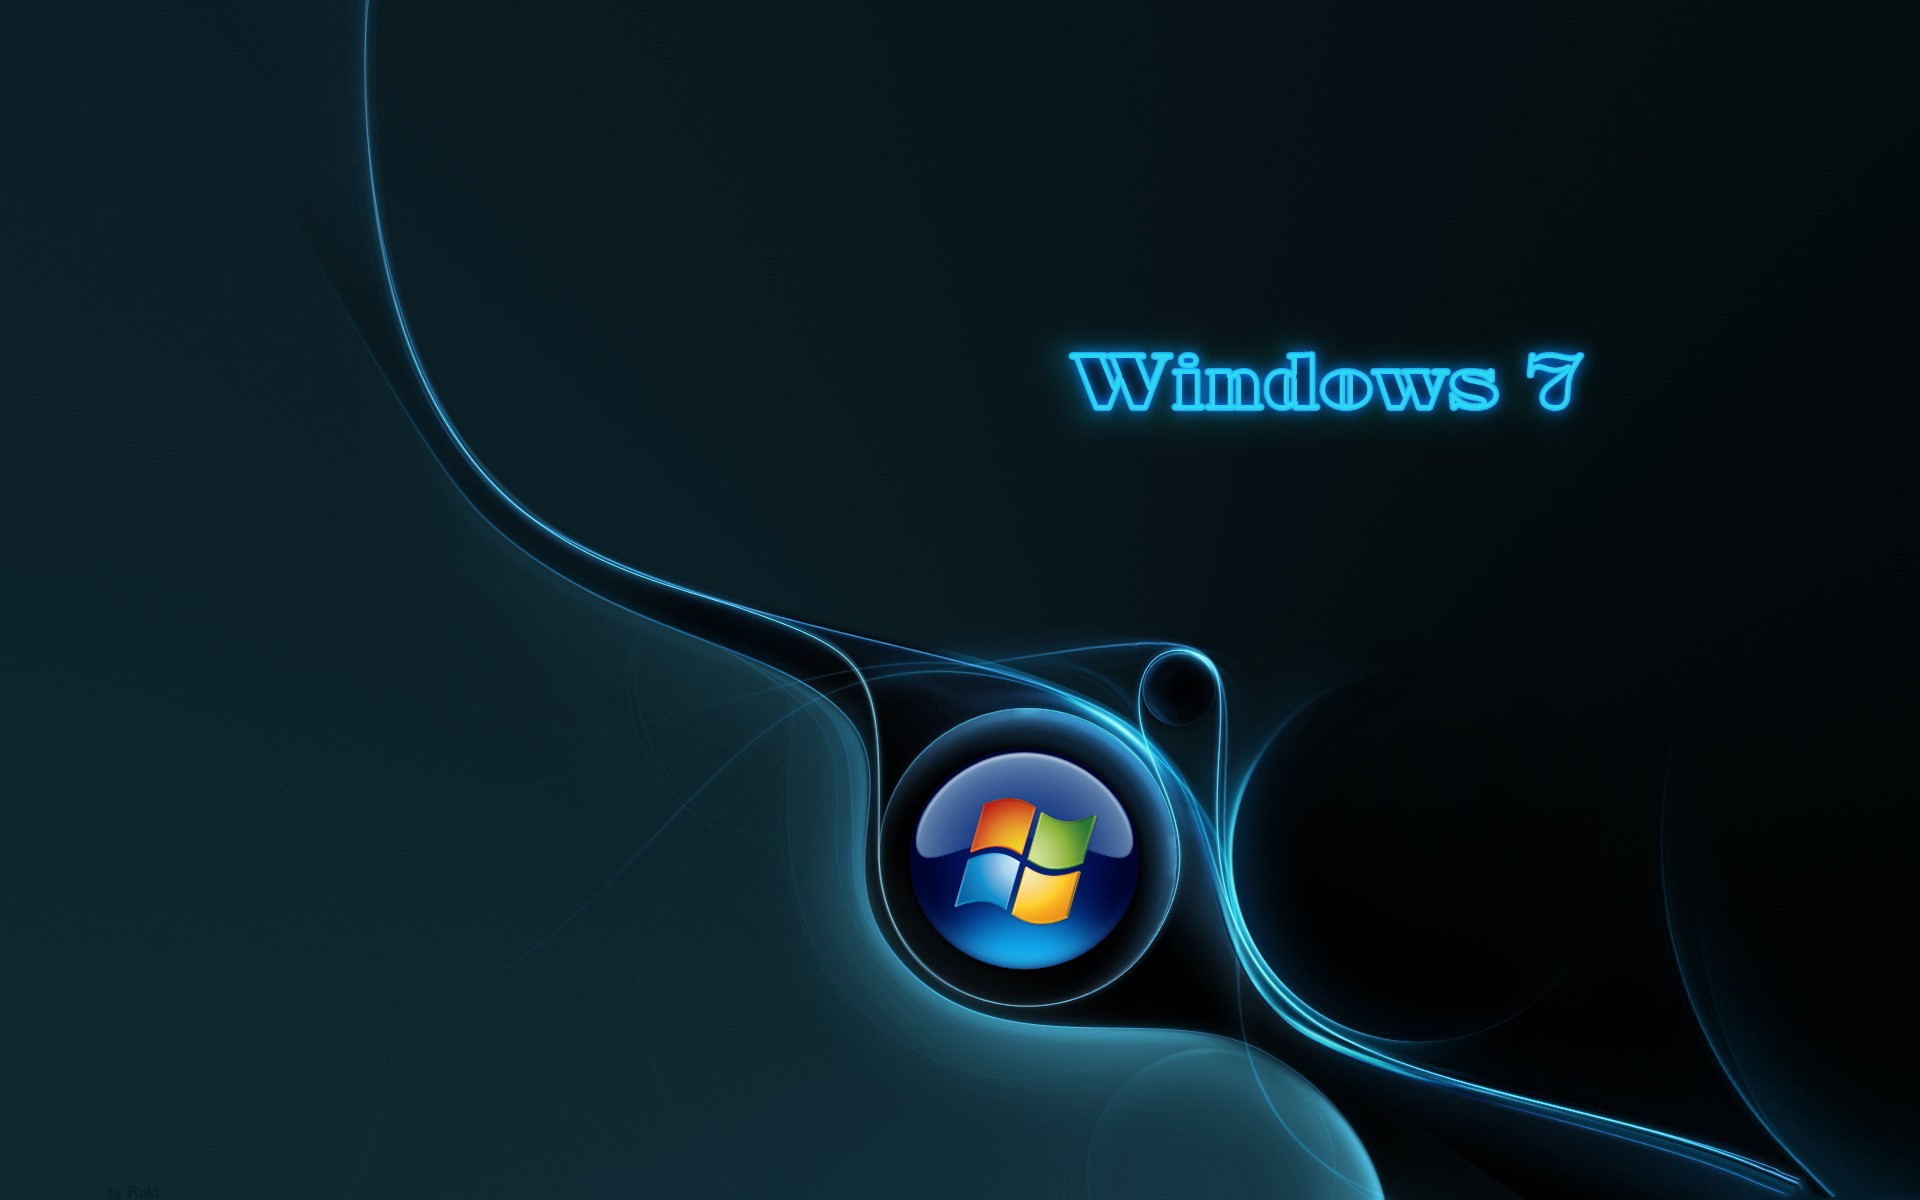 windows 7, windows, technology images